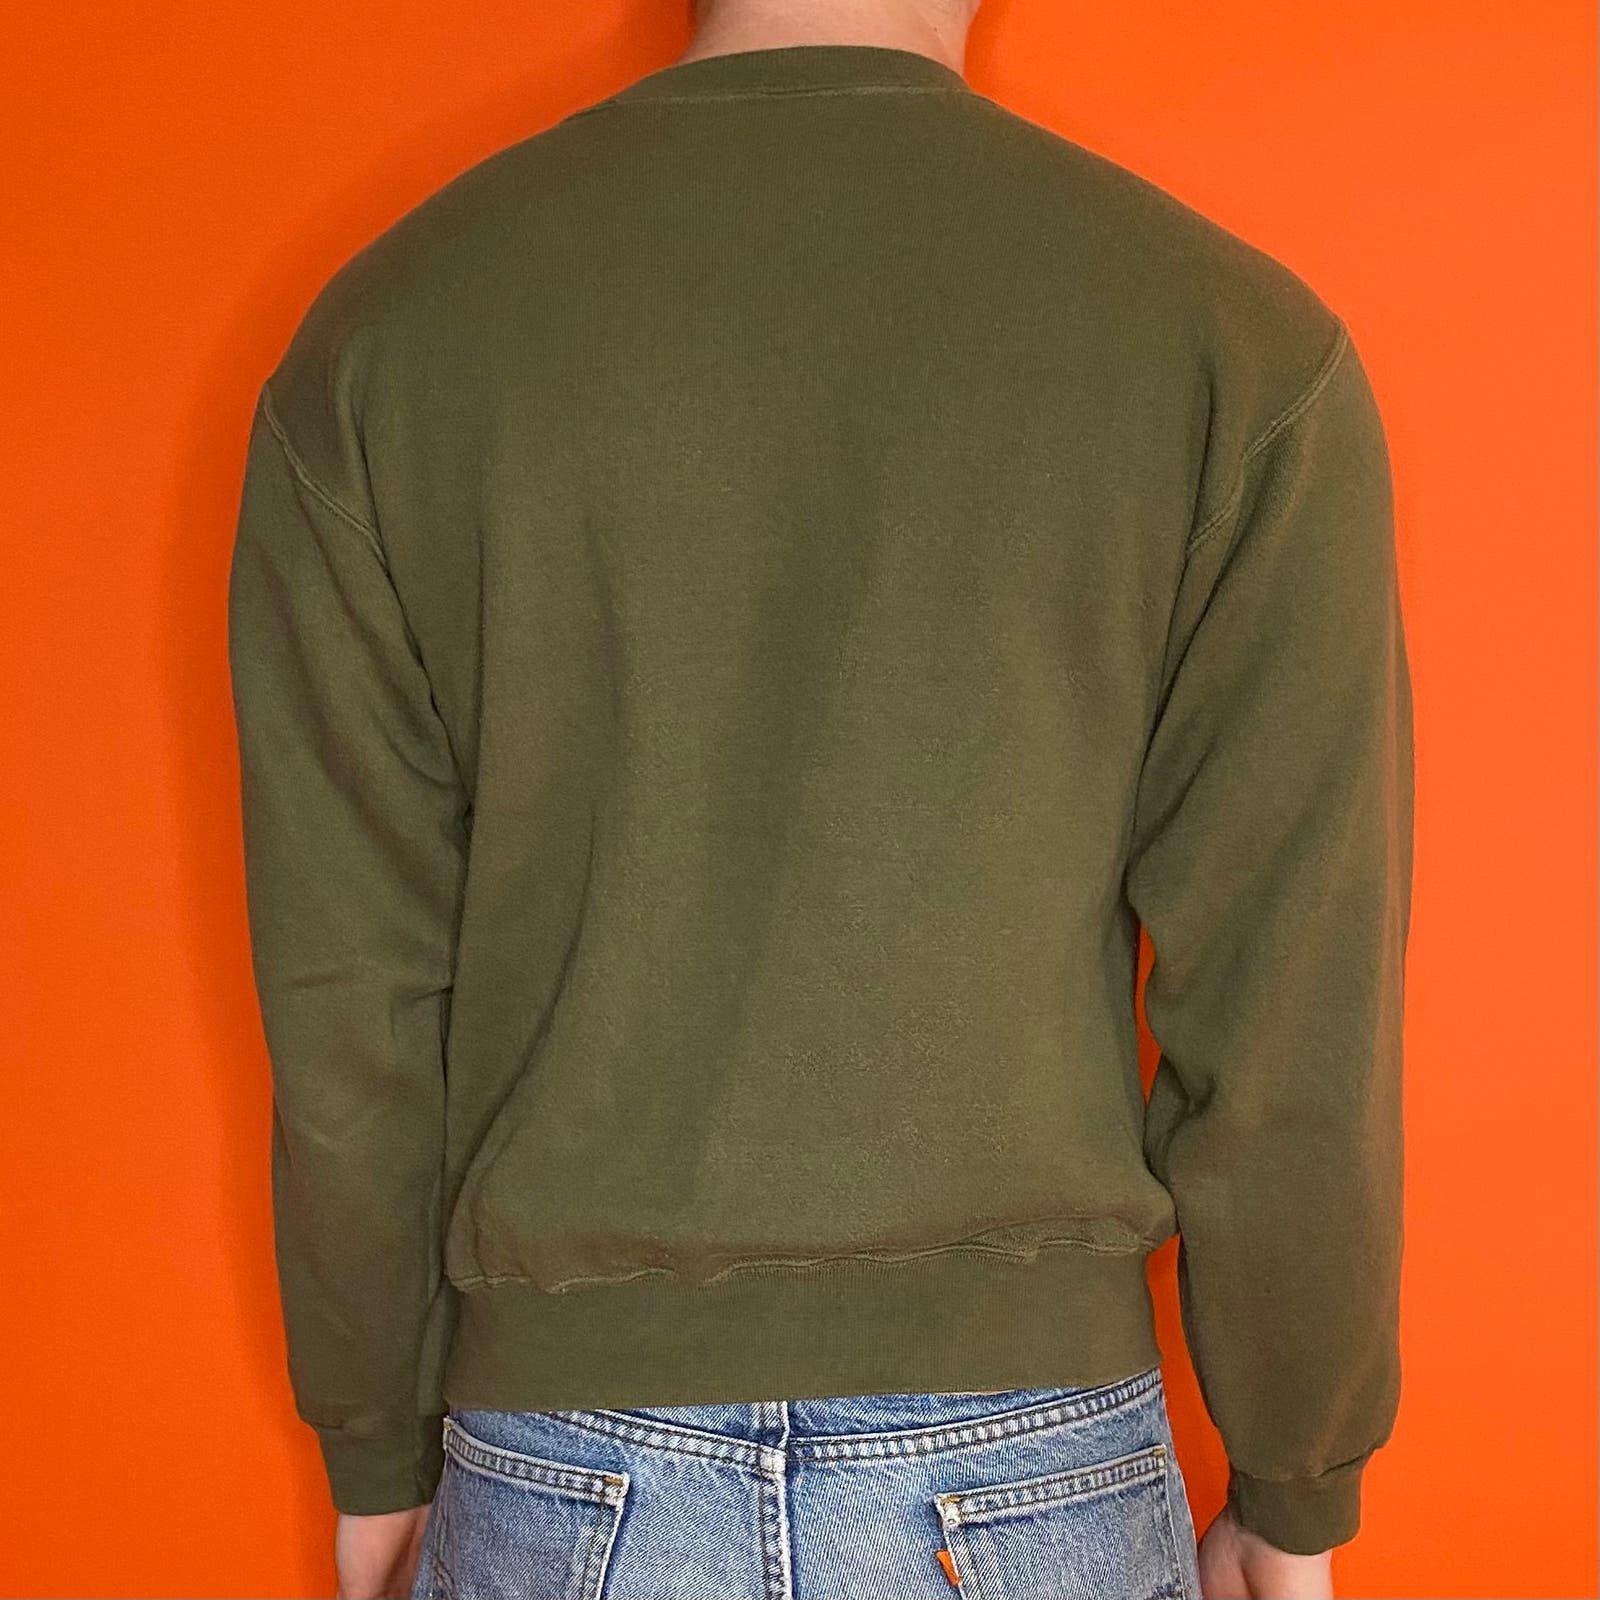 Vintage Crazy Vintage Y2K Sweatshirt US Marines Military Green Size US S / EU 44-46 / 1 - 2 Preview